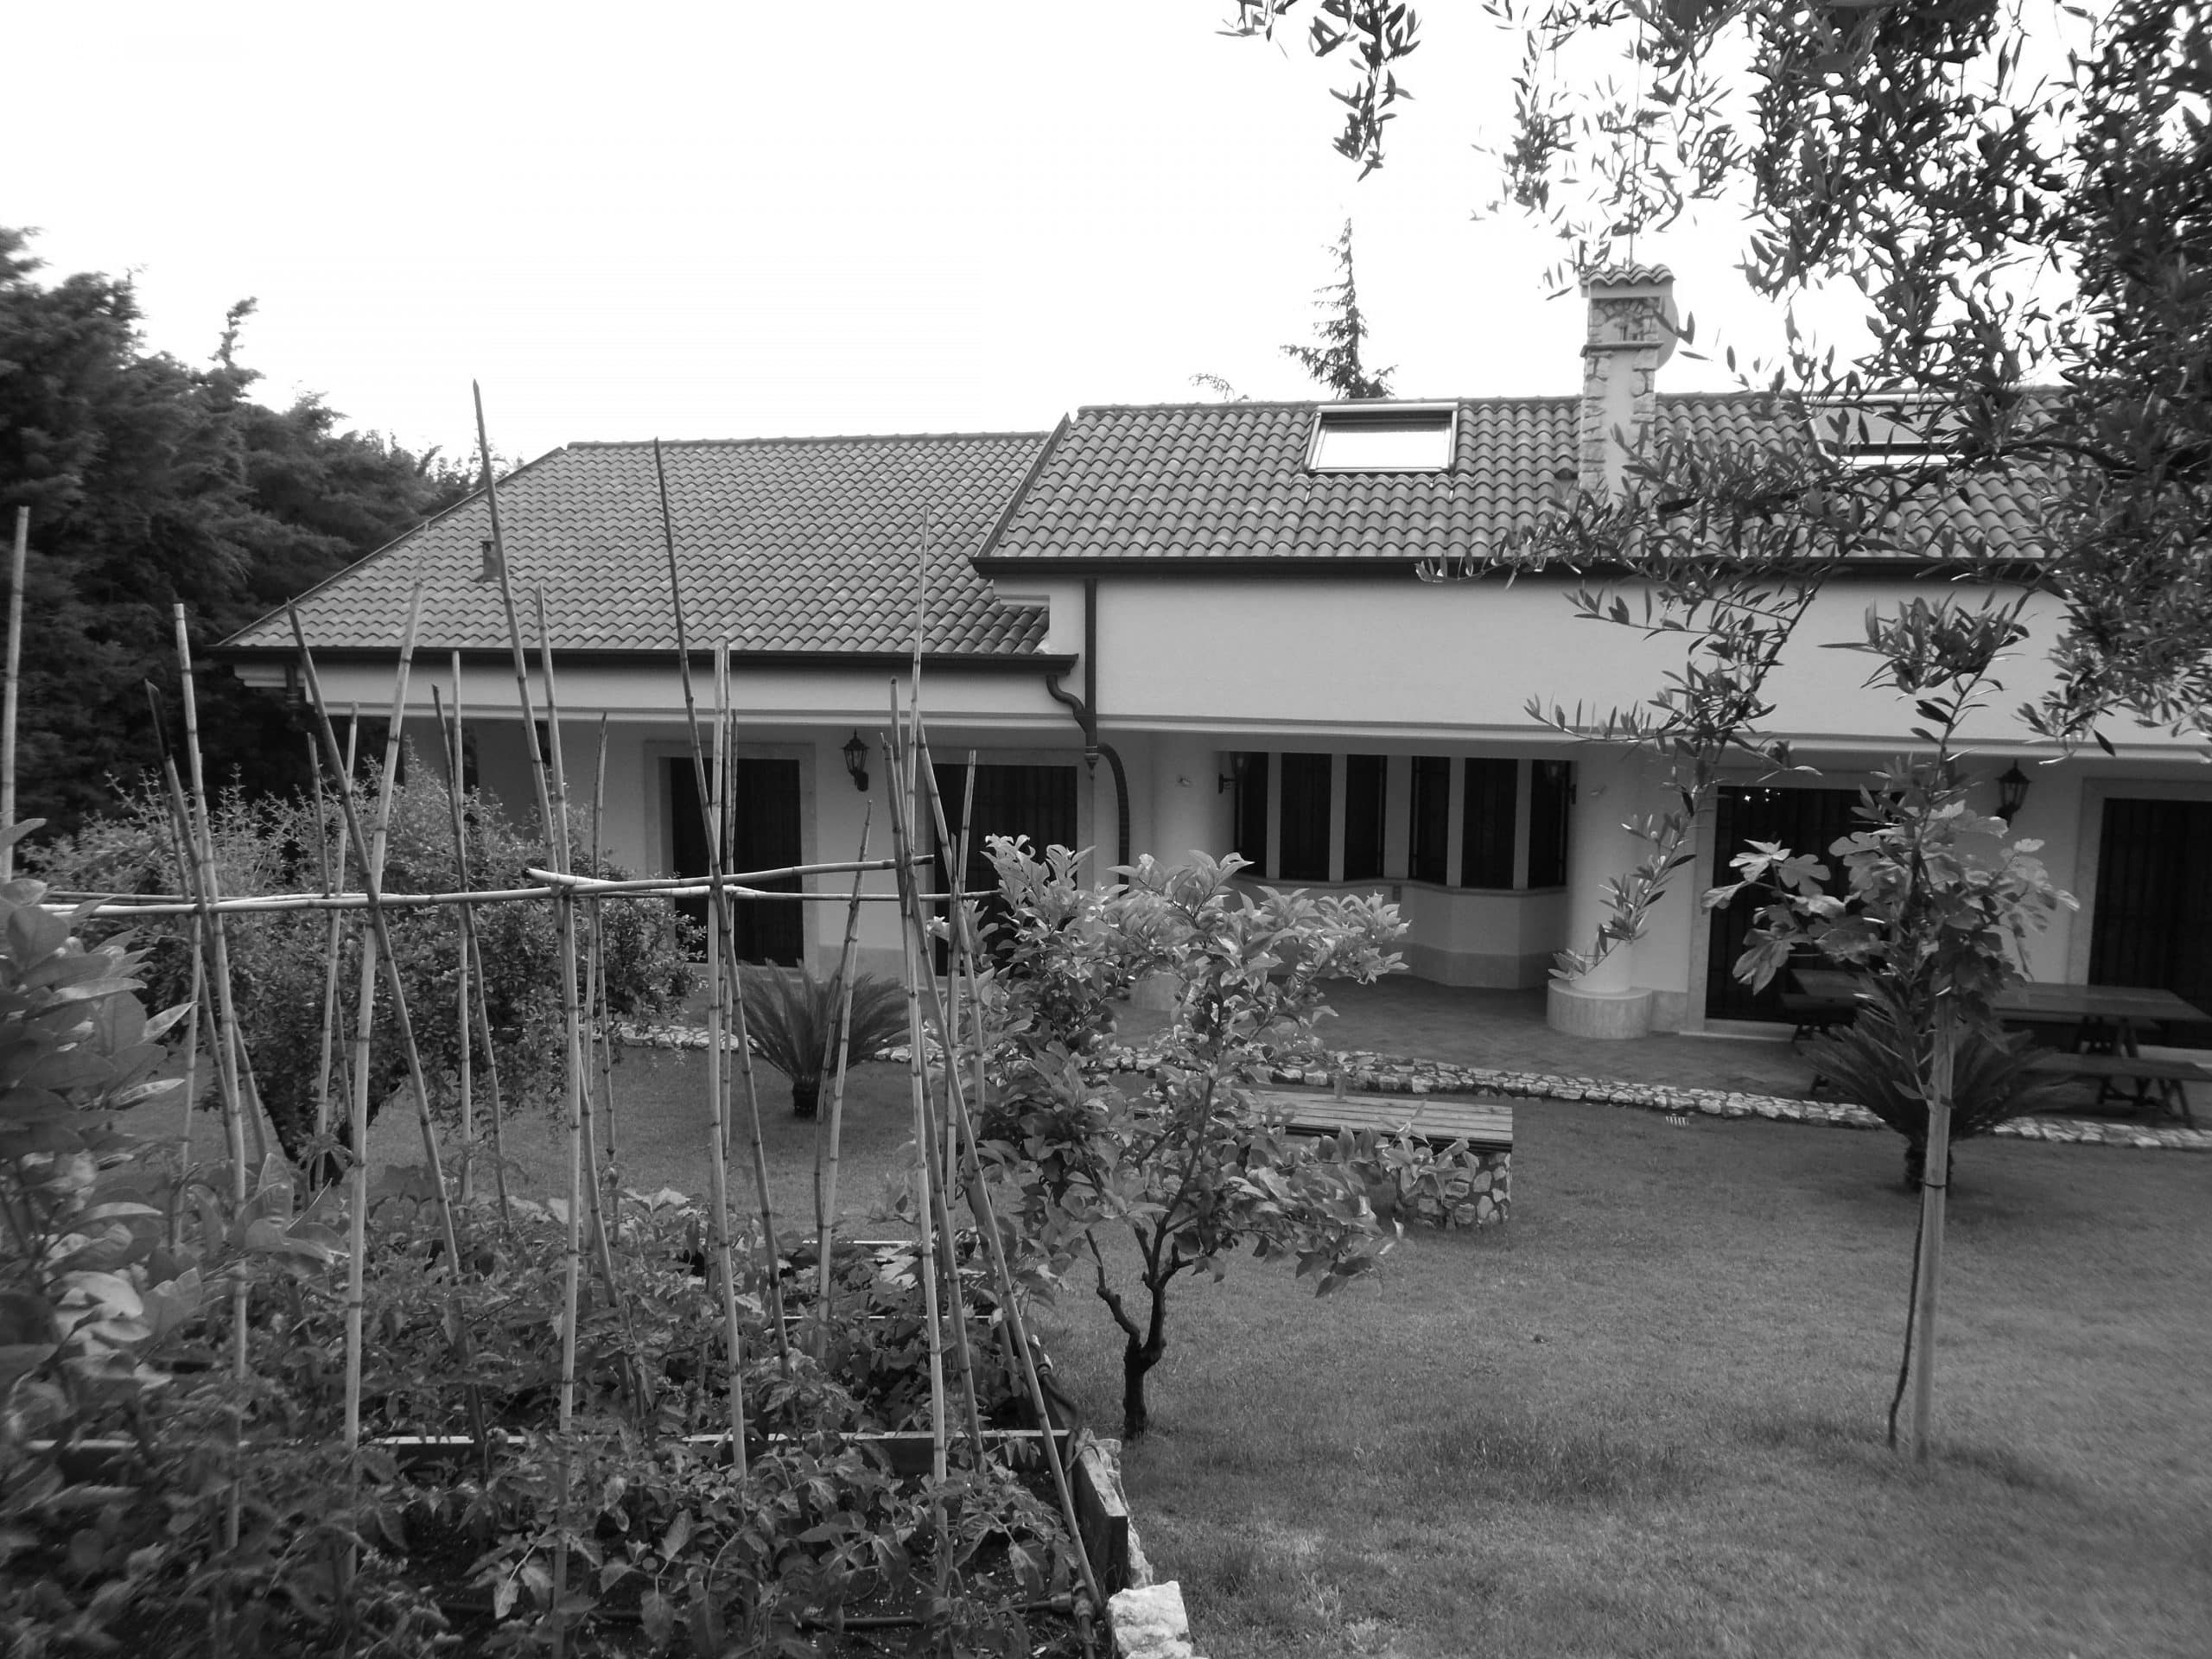 23 - Casa unifamiliare in via Nino D’Andrea, Guidonia Montecelio (RM), con R. Carovana - Vista esterna